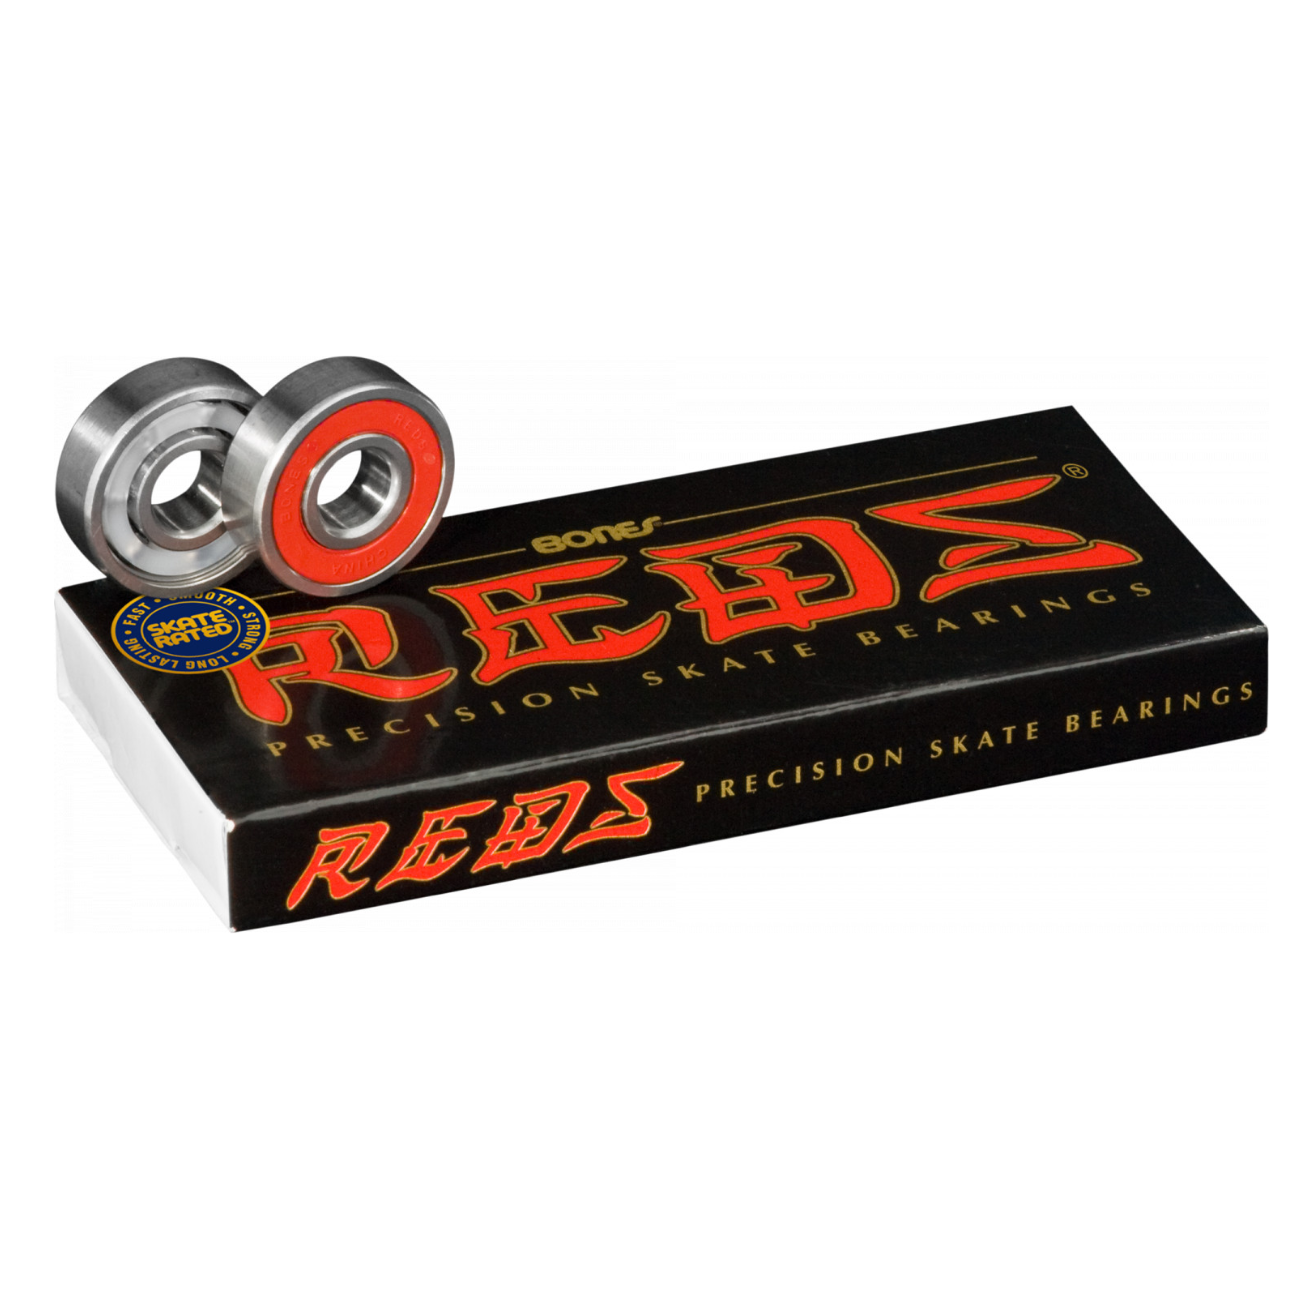 Reds Skateboard Bearings 8pk